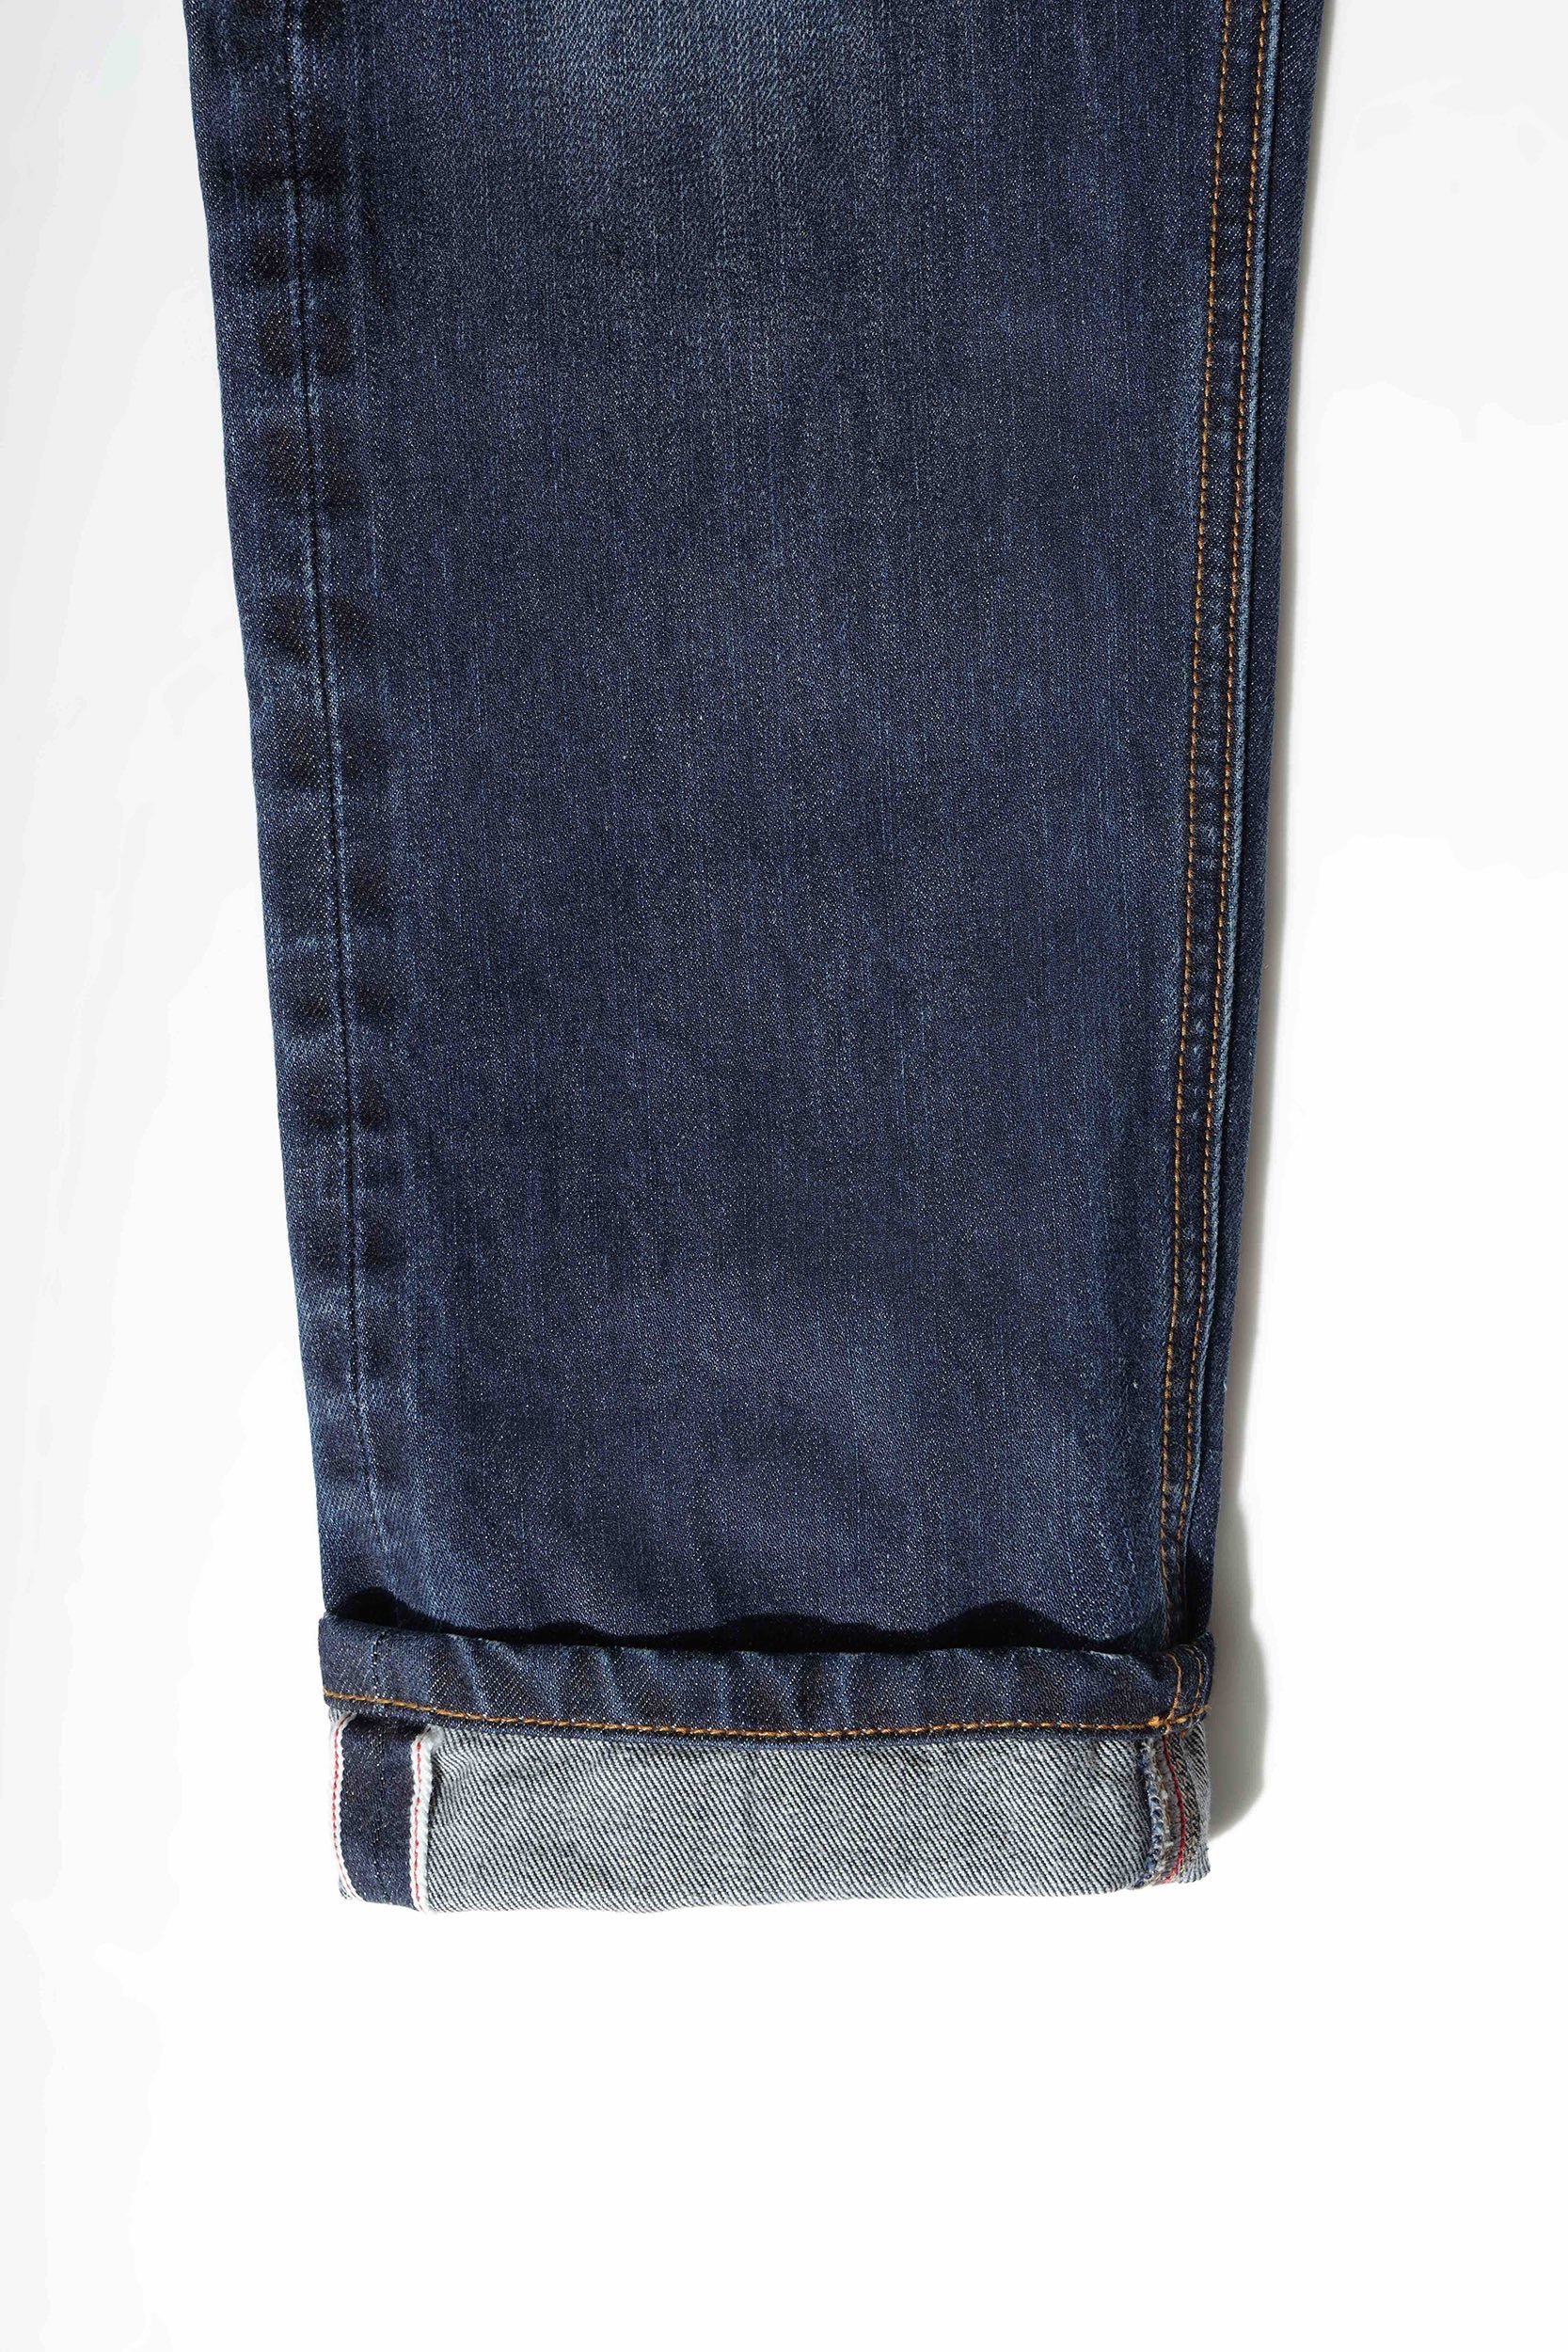 J Brand Jeans | Jeans brands, J brand jeans, Clothes design